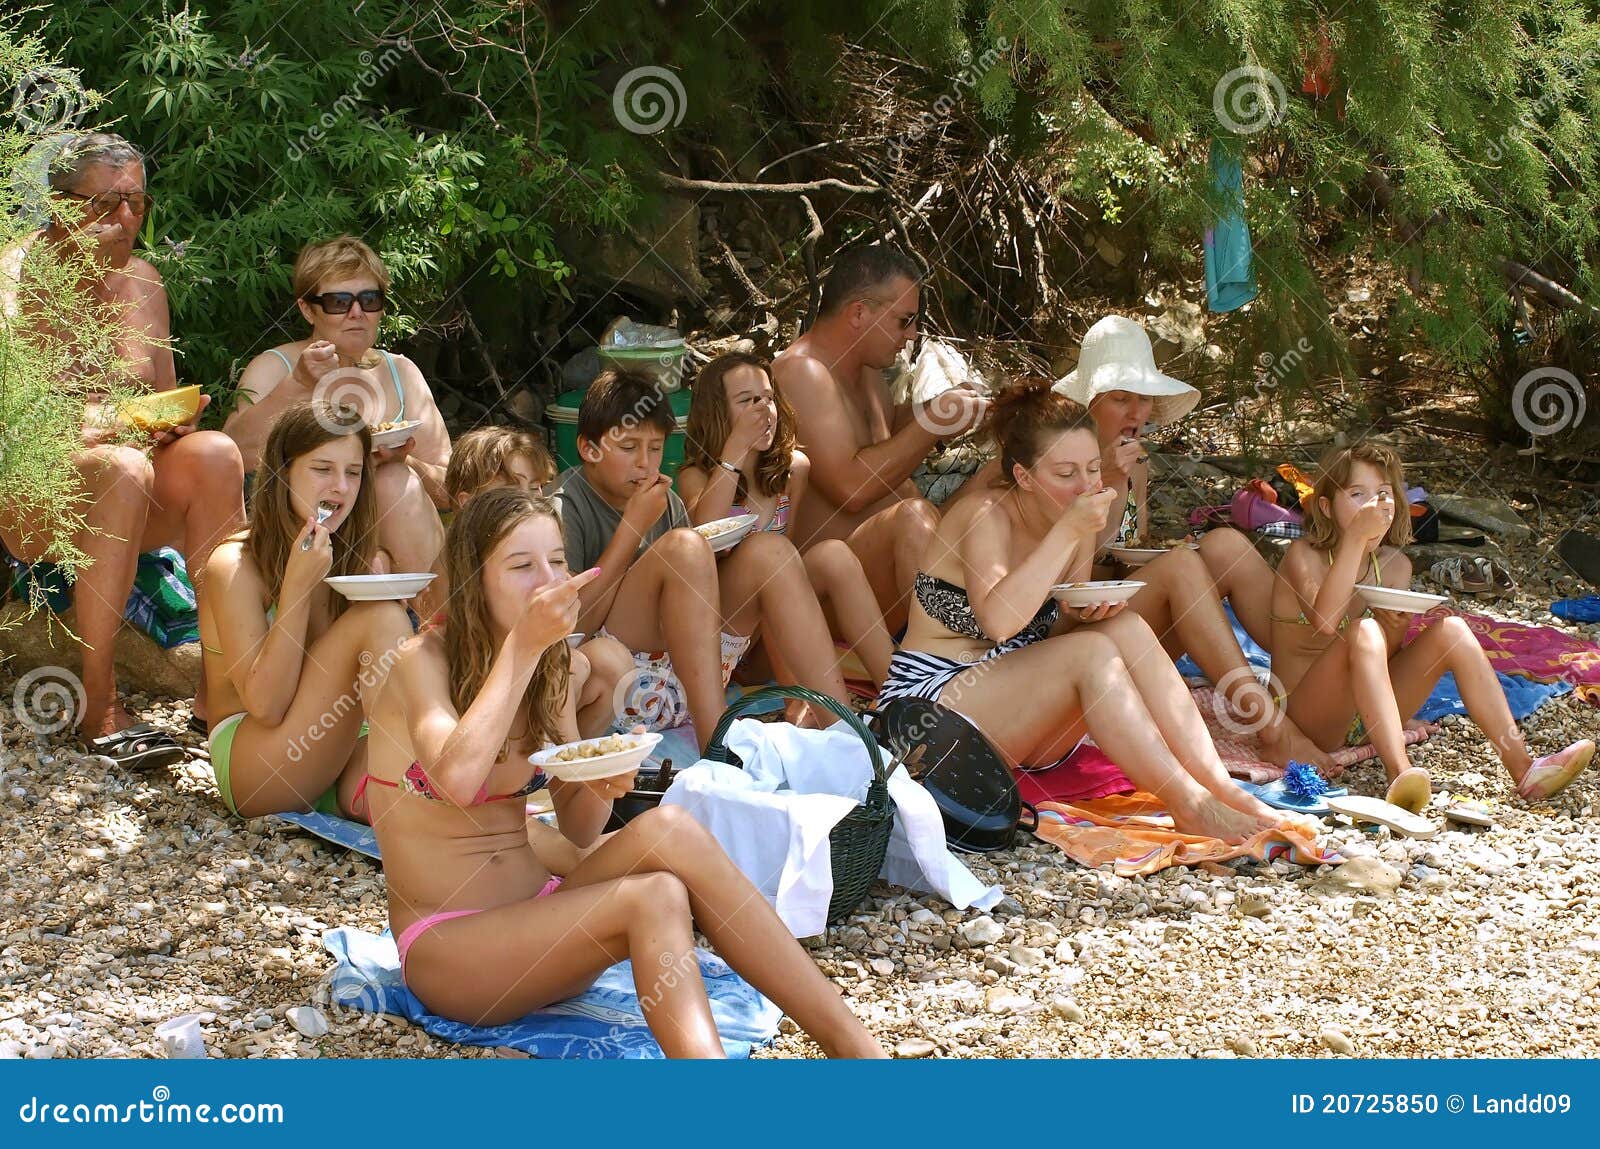 craig tumelty add family nude beach gallery photo